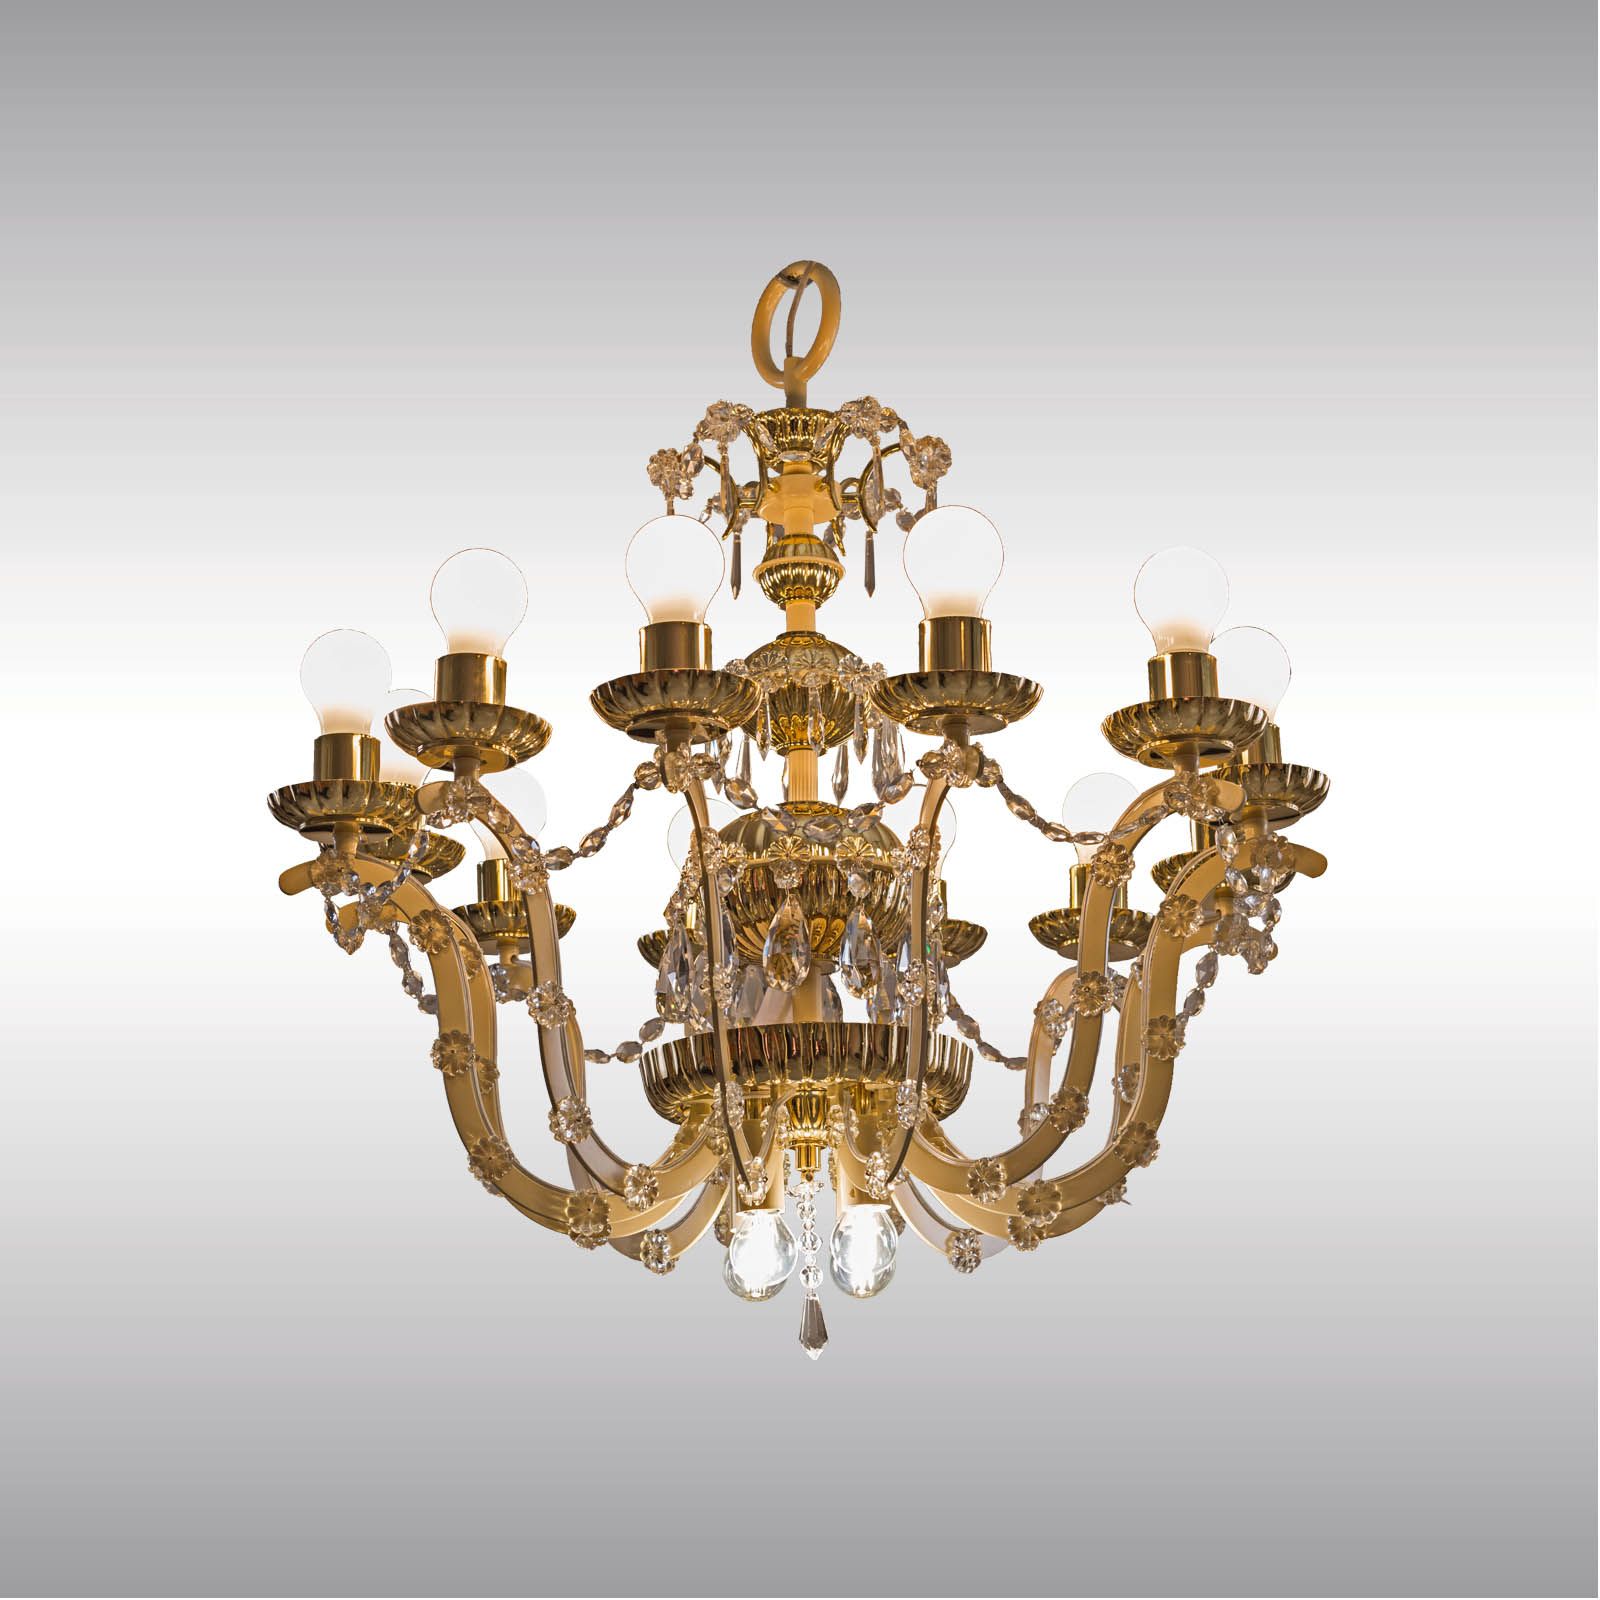 WOKA LAMPS VIENNA - OrderNr.: 50078|Magnificent WOKA Chandelier mid century modern - Design: WOKA